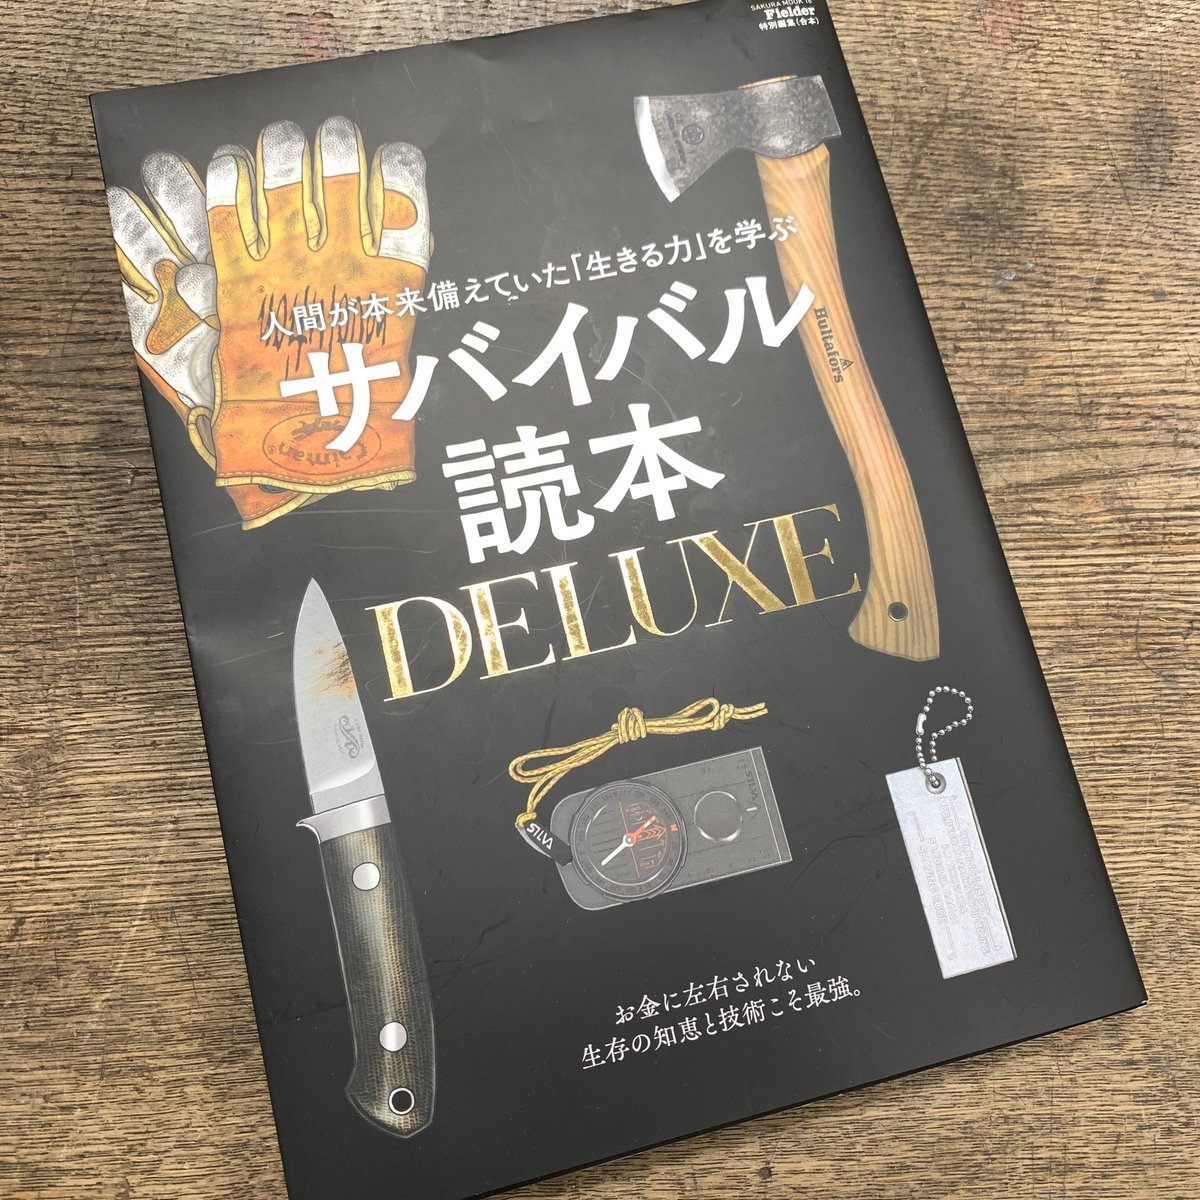 サバイバル読本DELUXE　Fielder編集部 (編集)　笠倉出版社 (2020/4/22)